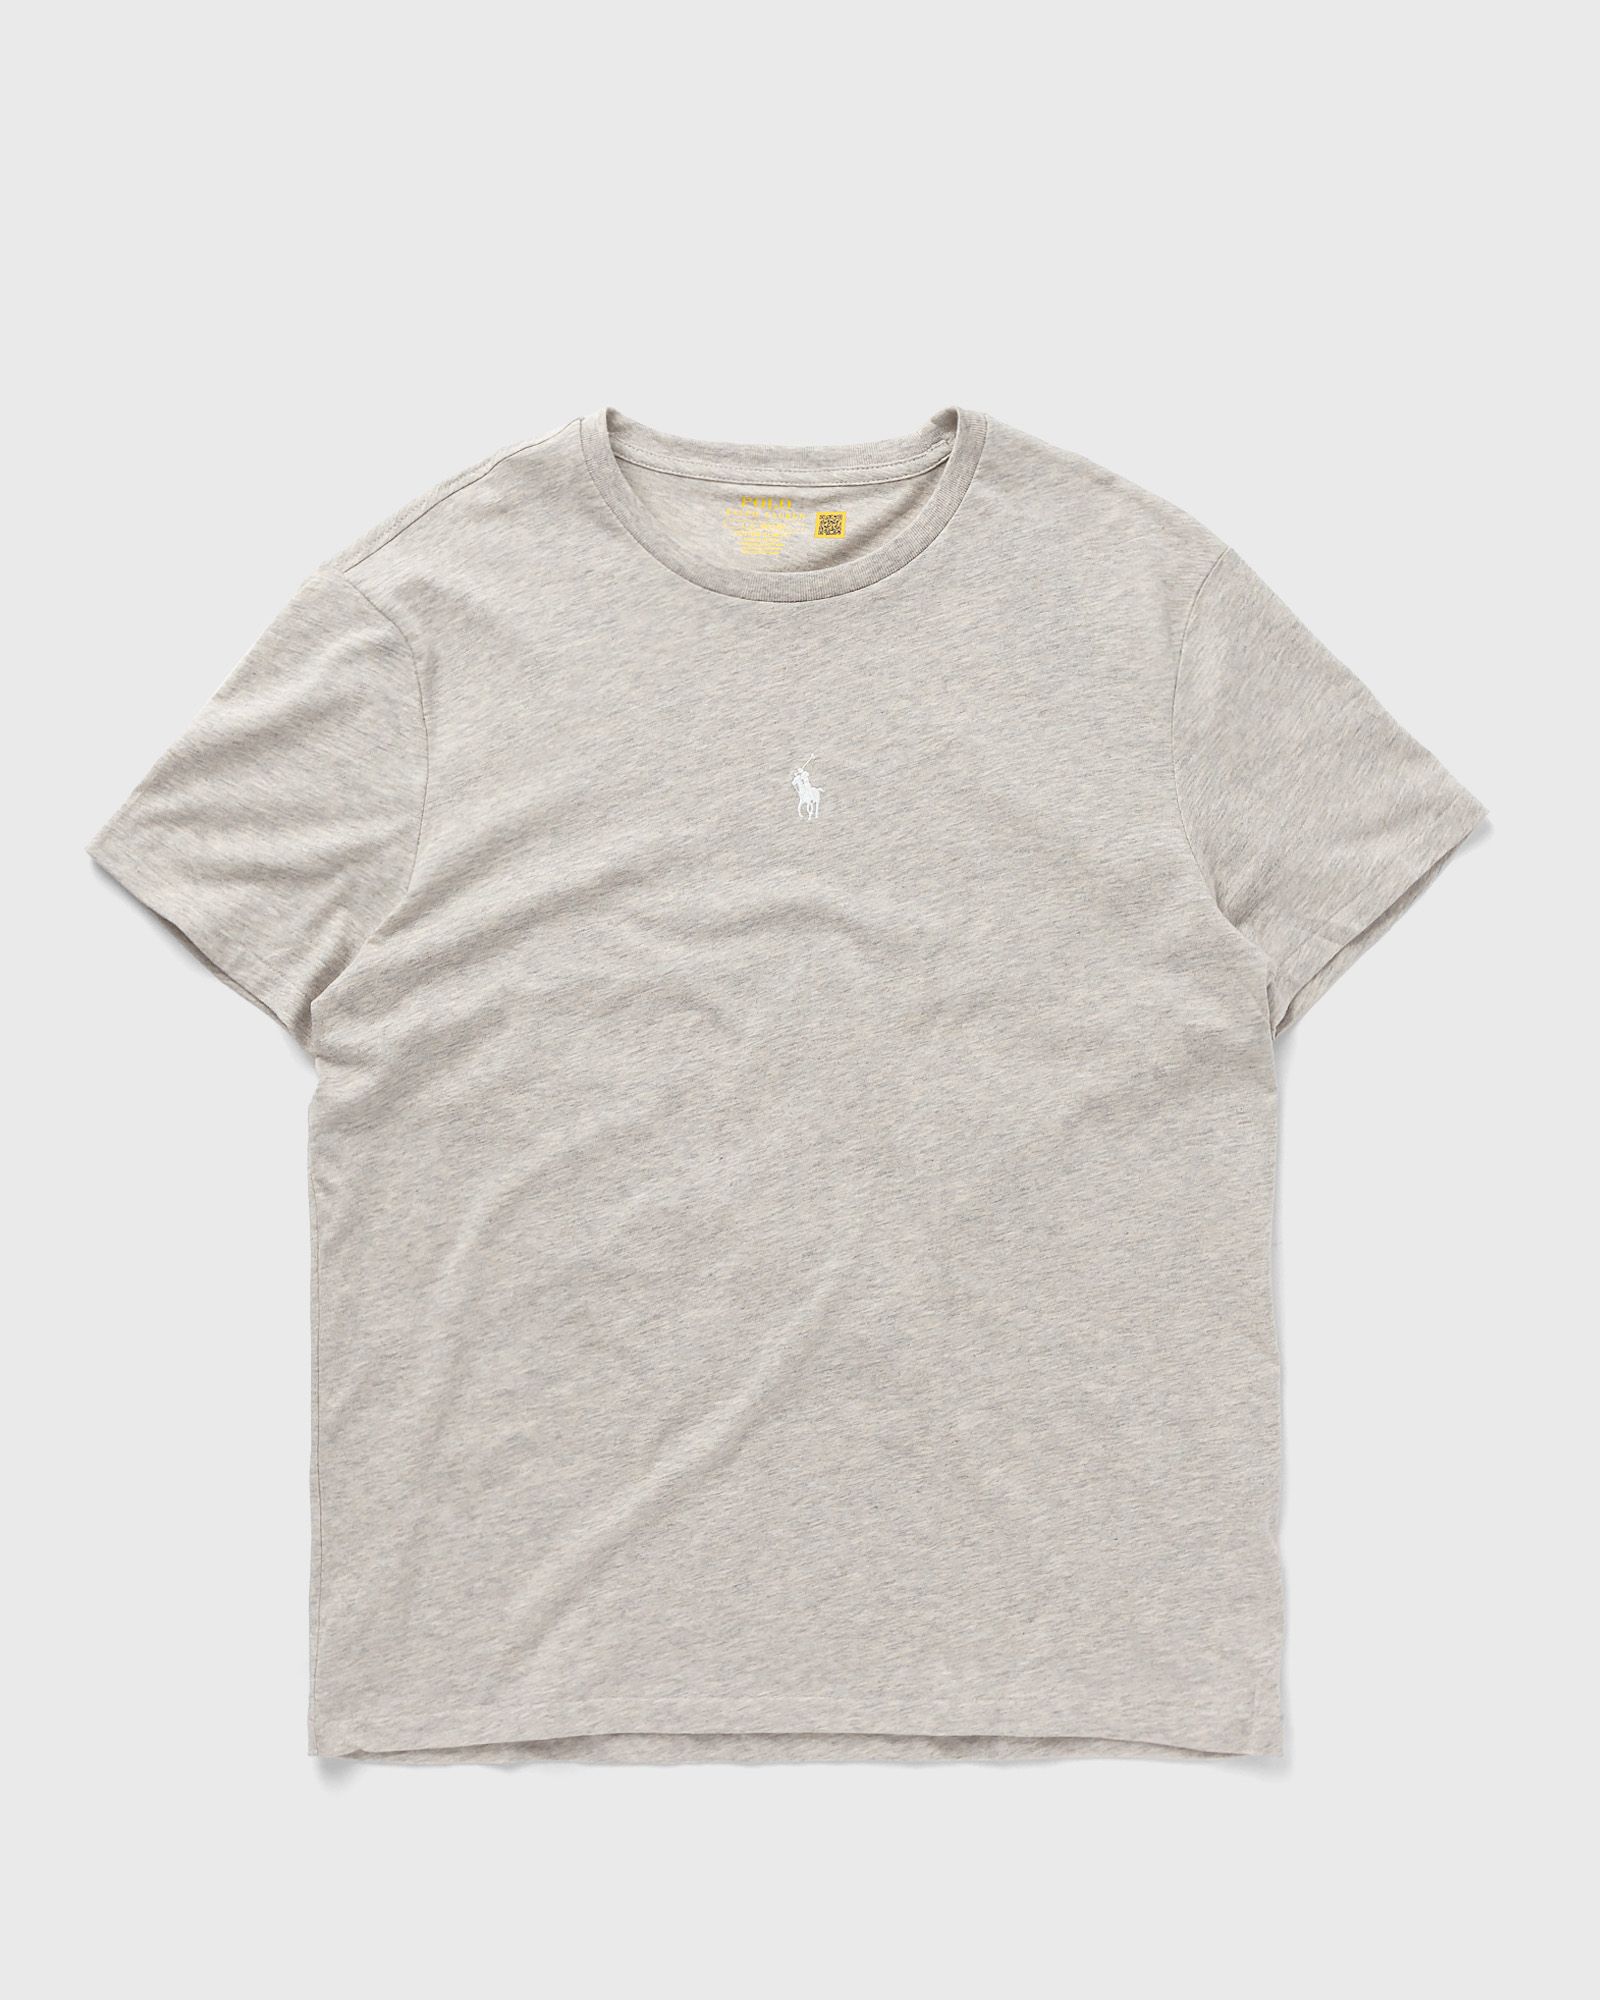 Polo Ralph Lauren - short sleeve-tee men shortsleeves grey in größe:xxl